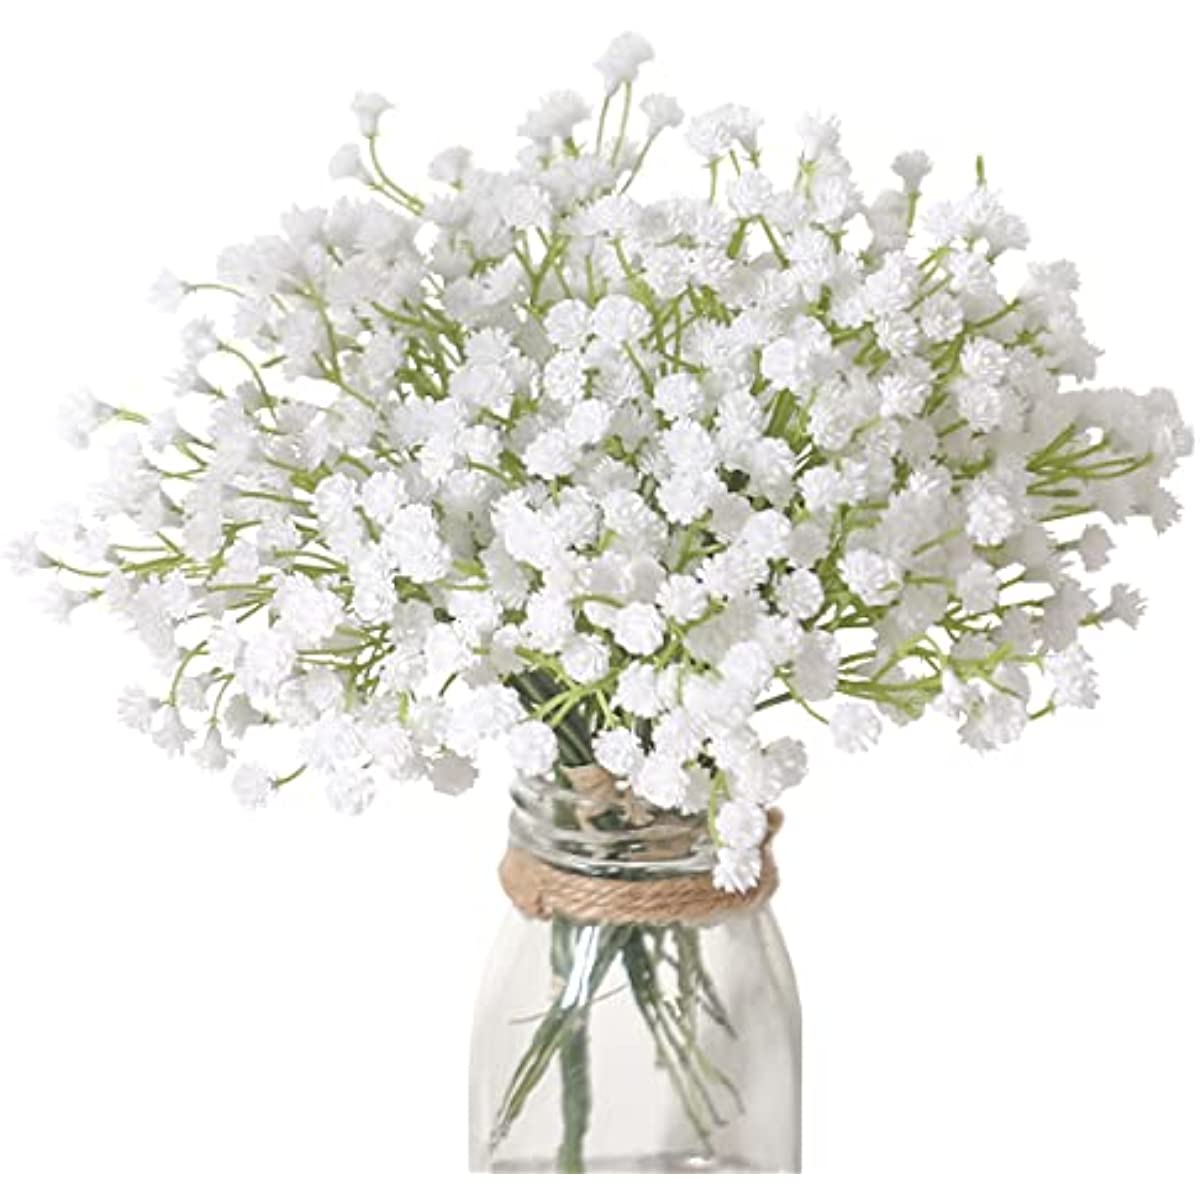 

4pcs 12 Bunches White Babys Breath Flowers Artificial White Fake Flowers Gypsophila Diy Floral Bouquets Arrangement Wedding Home Decor, Vase Not Included